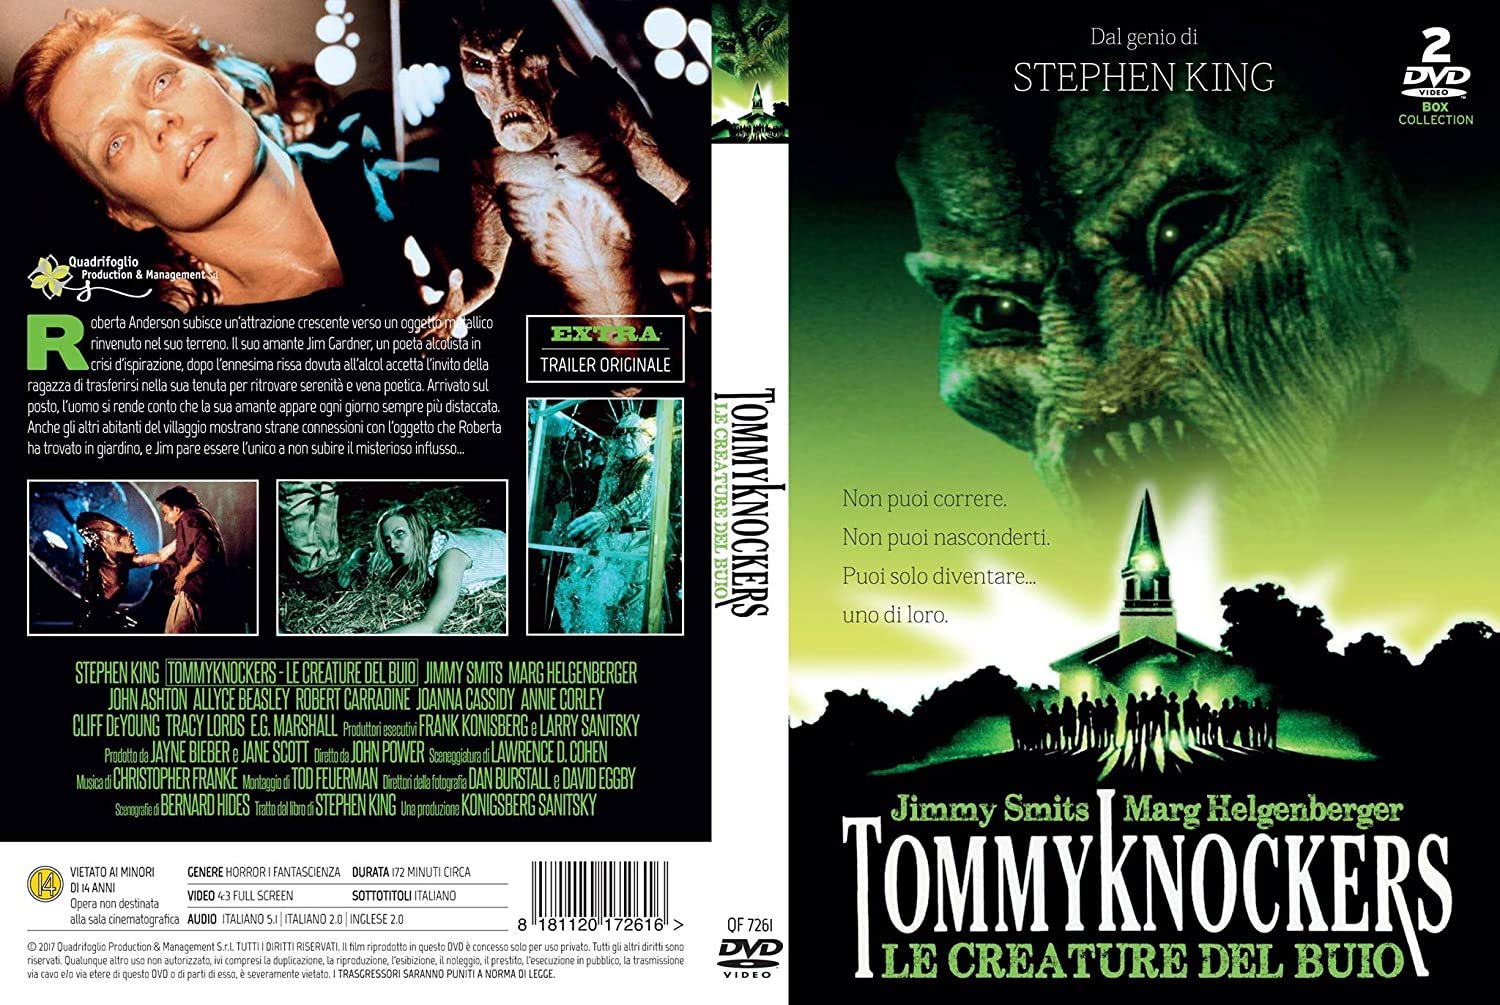 Stephen King - Tommyknockers 1993 - DvD 1